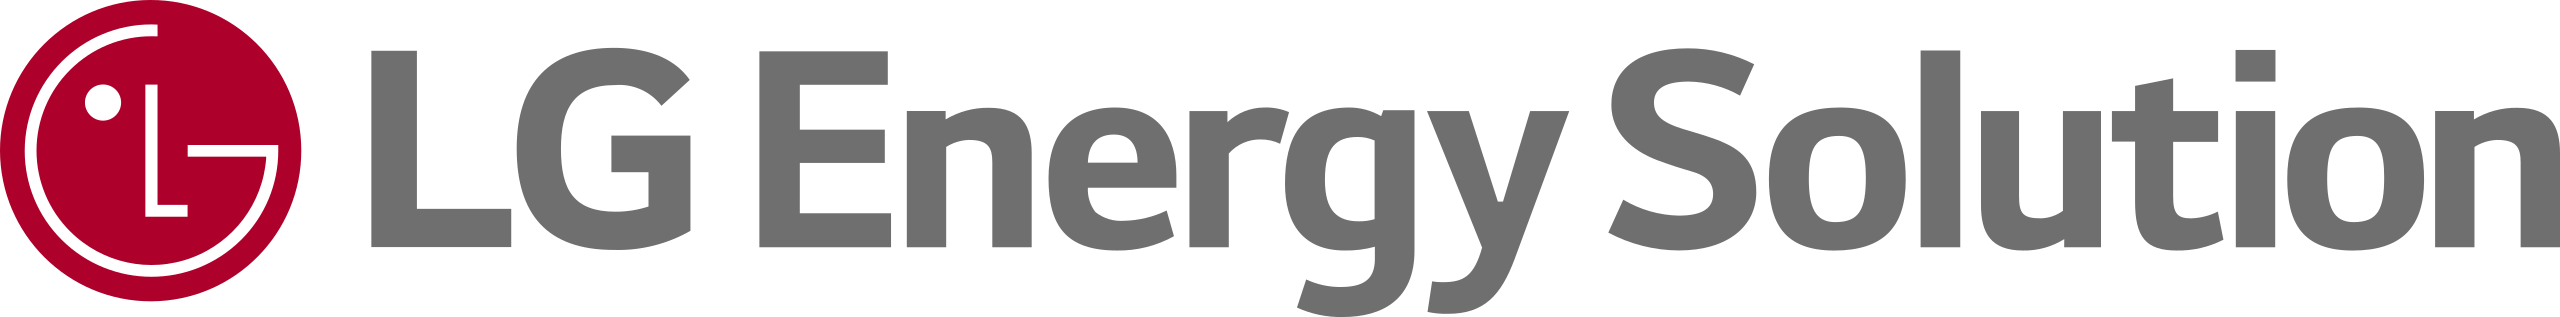 LG Energy Solution logo EN.svg